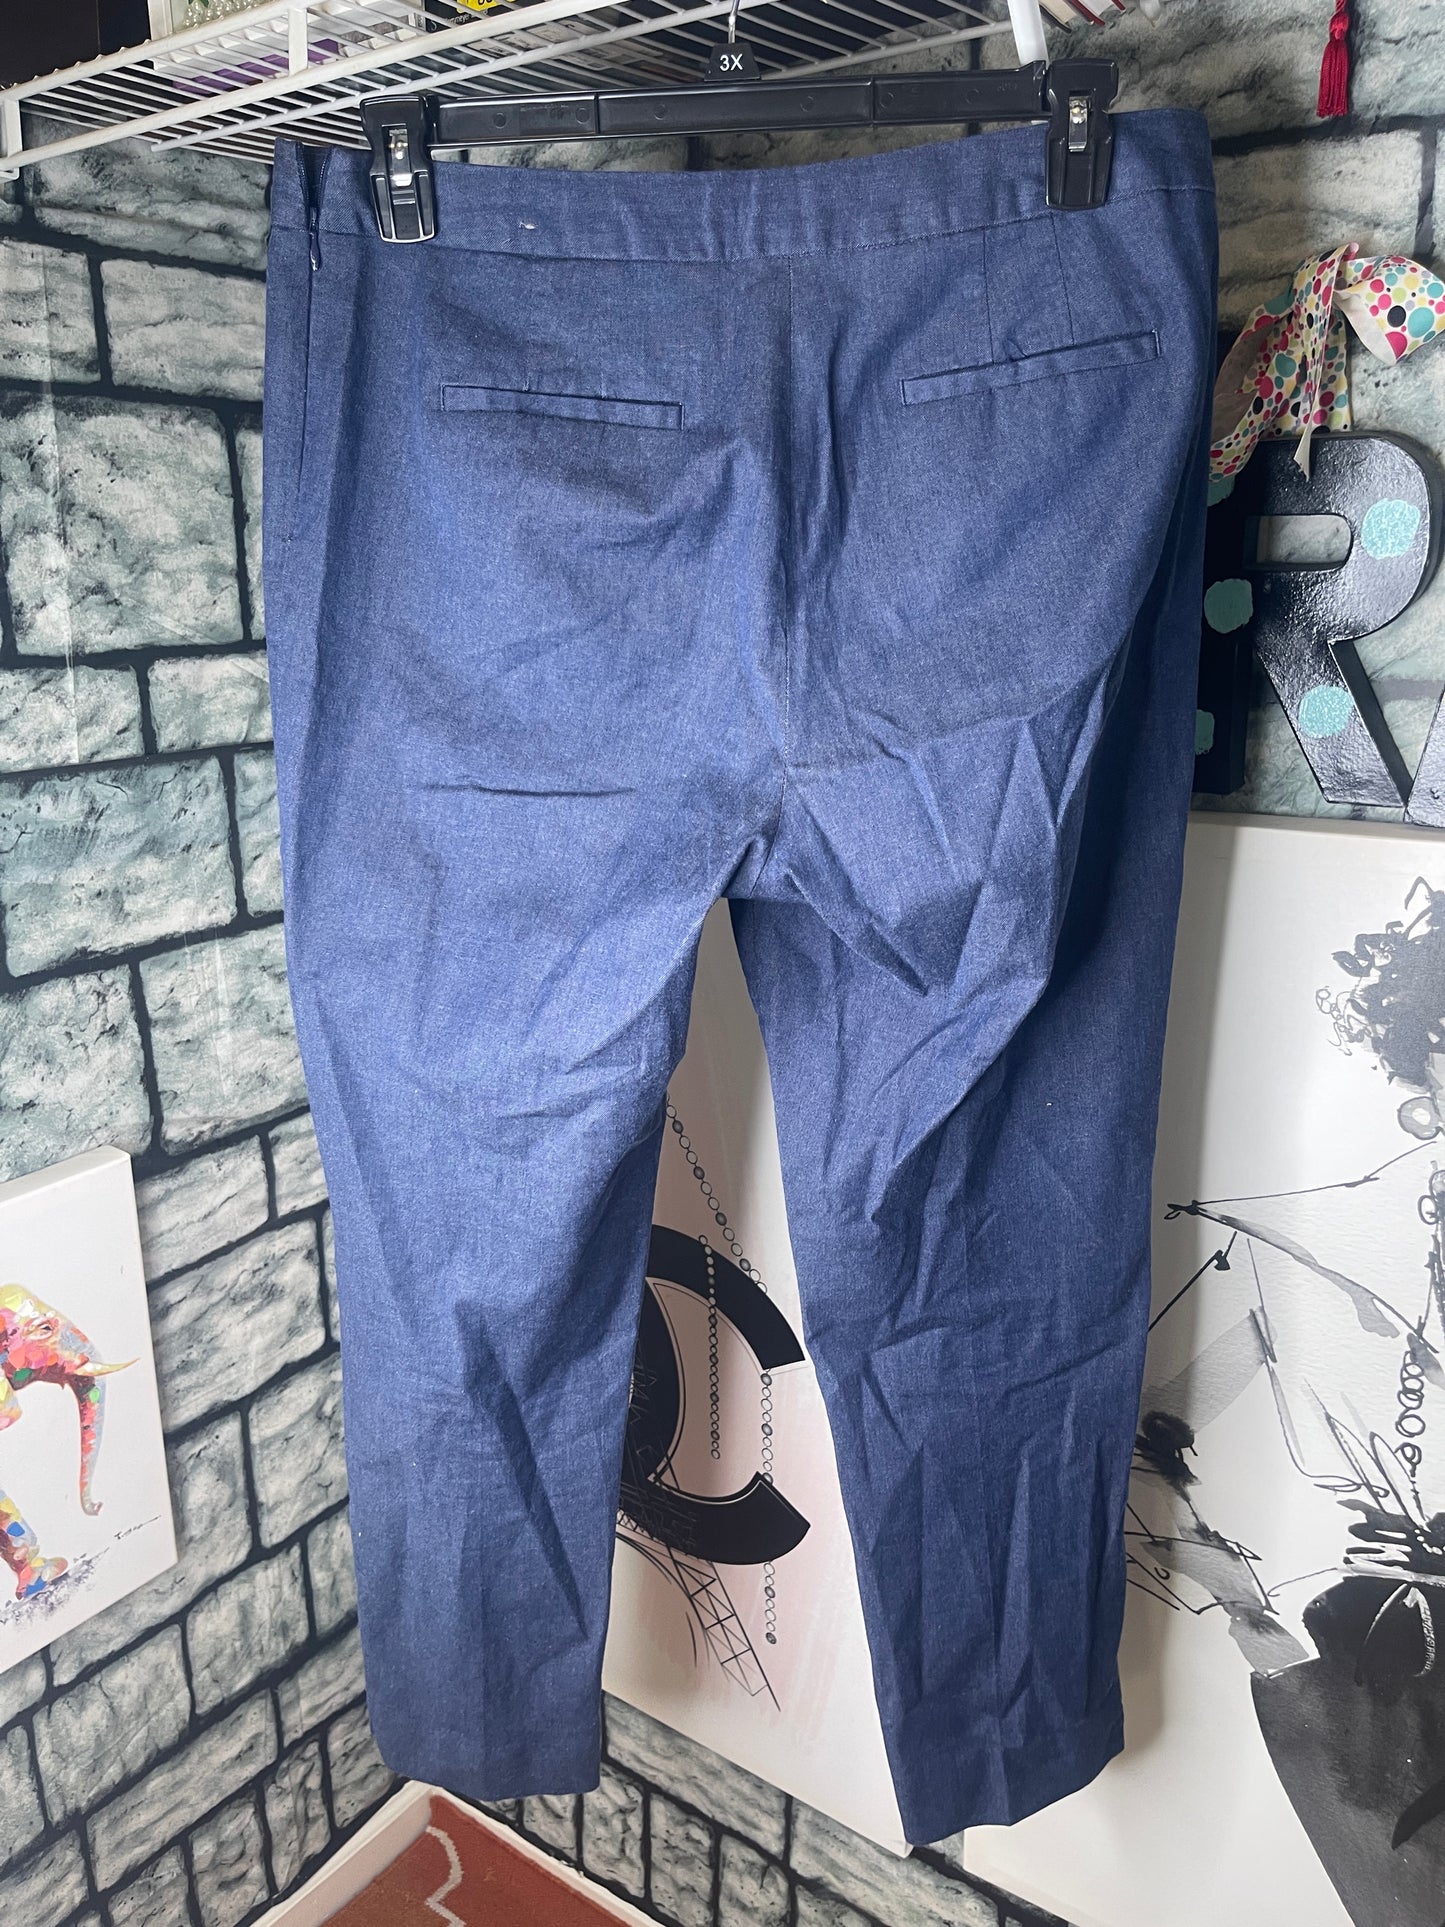 NEW Talbots Blue Denim Looking Casual Pants Women sz 12